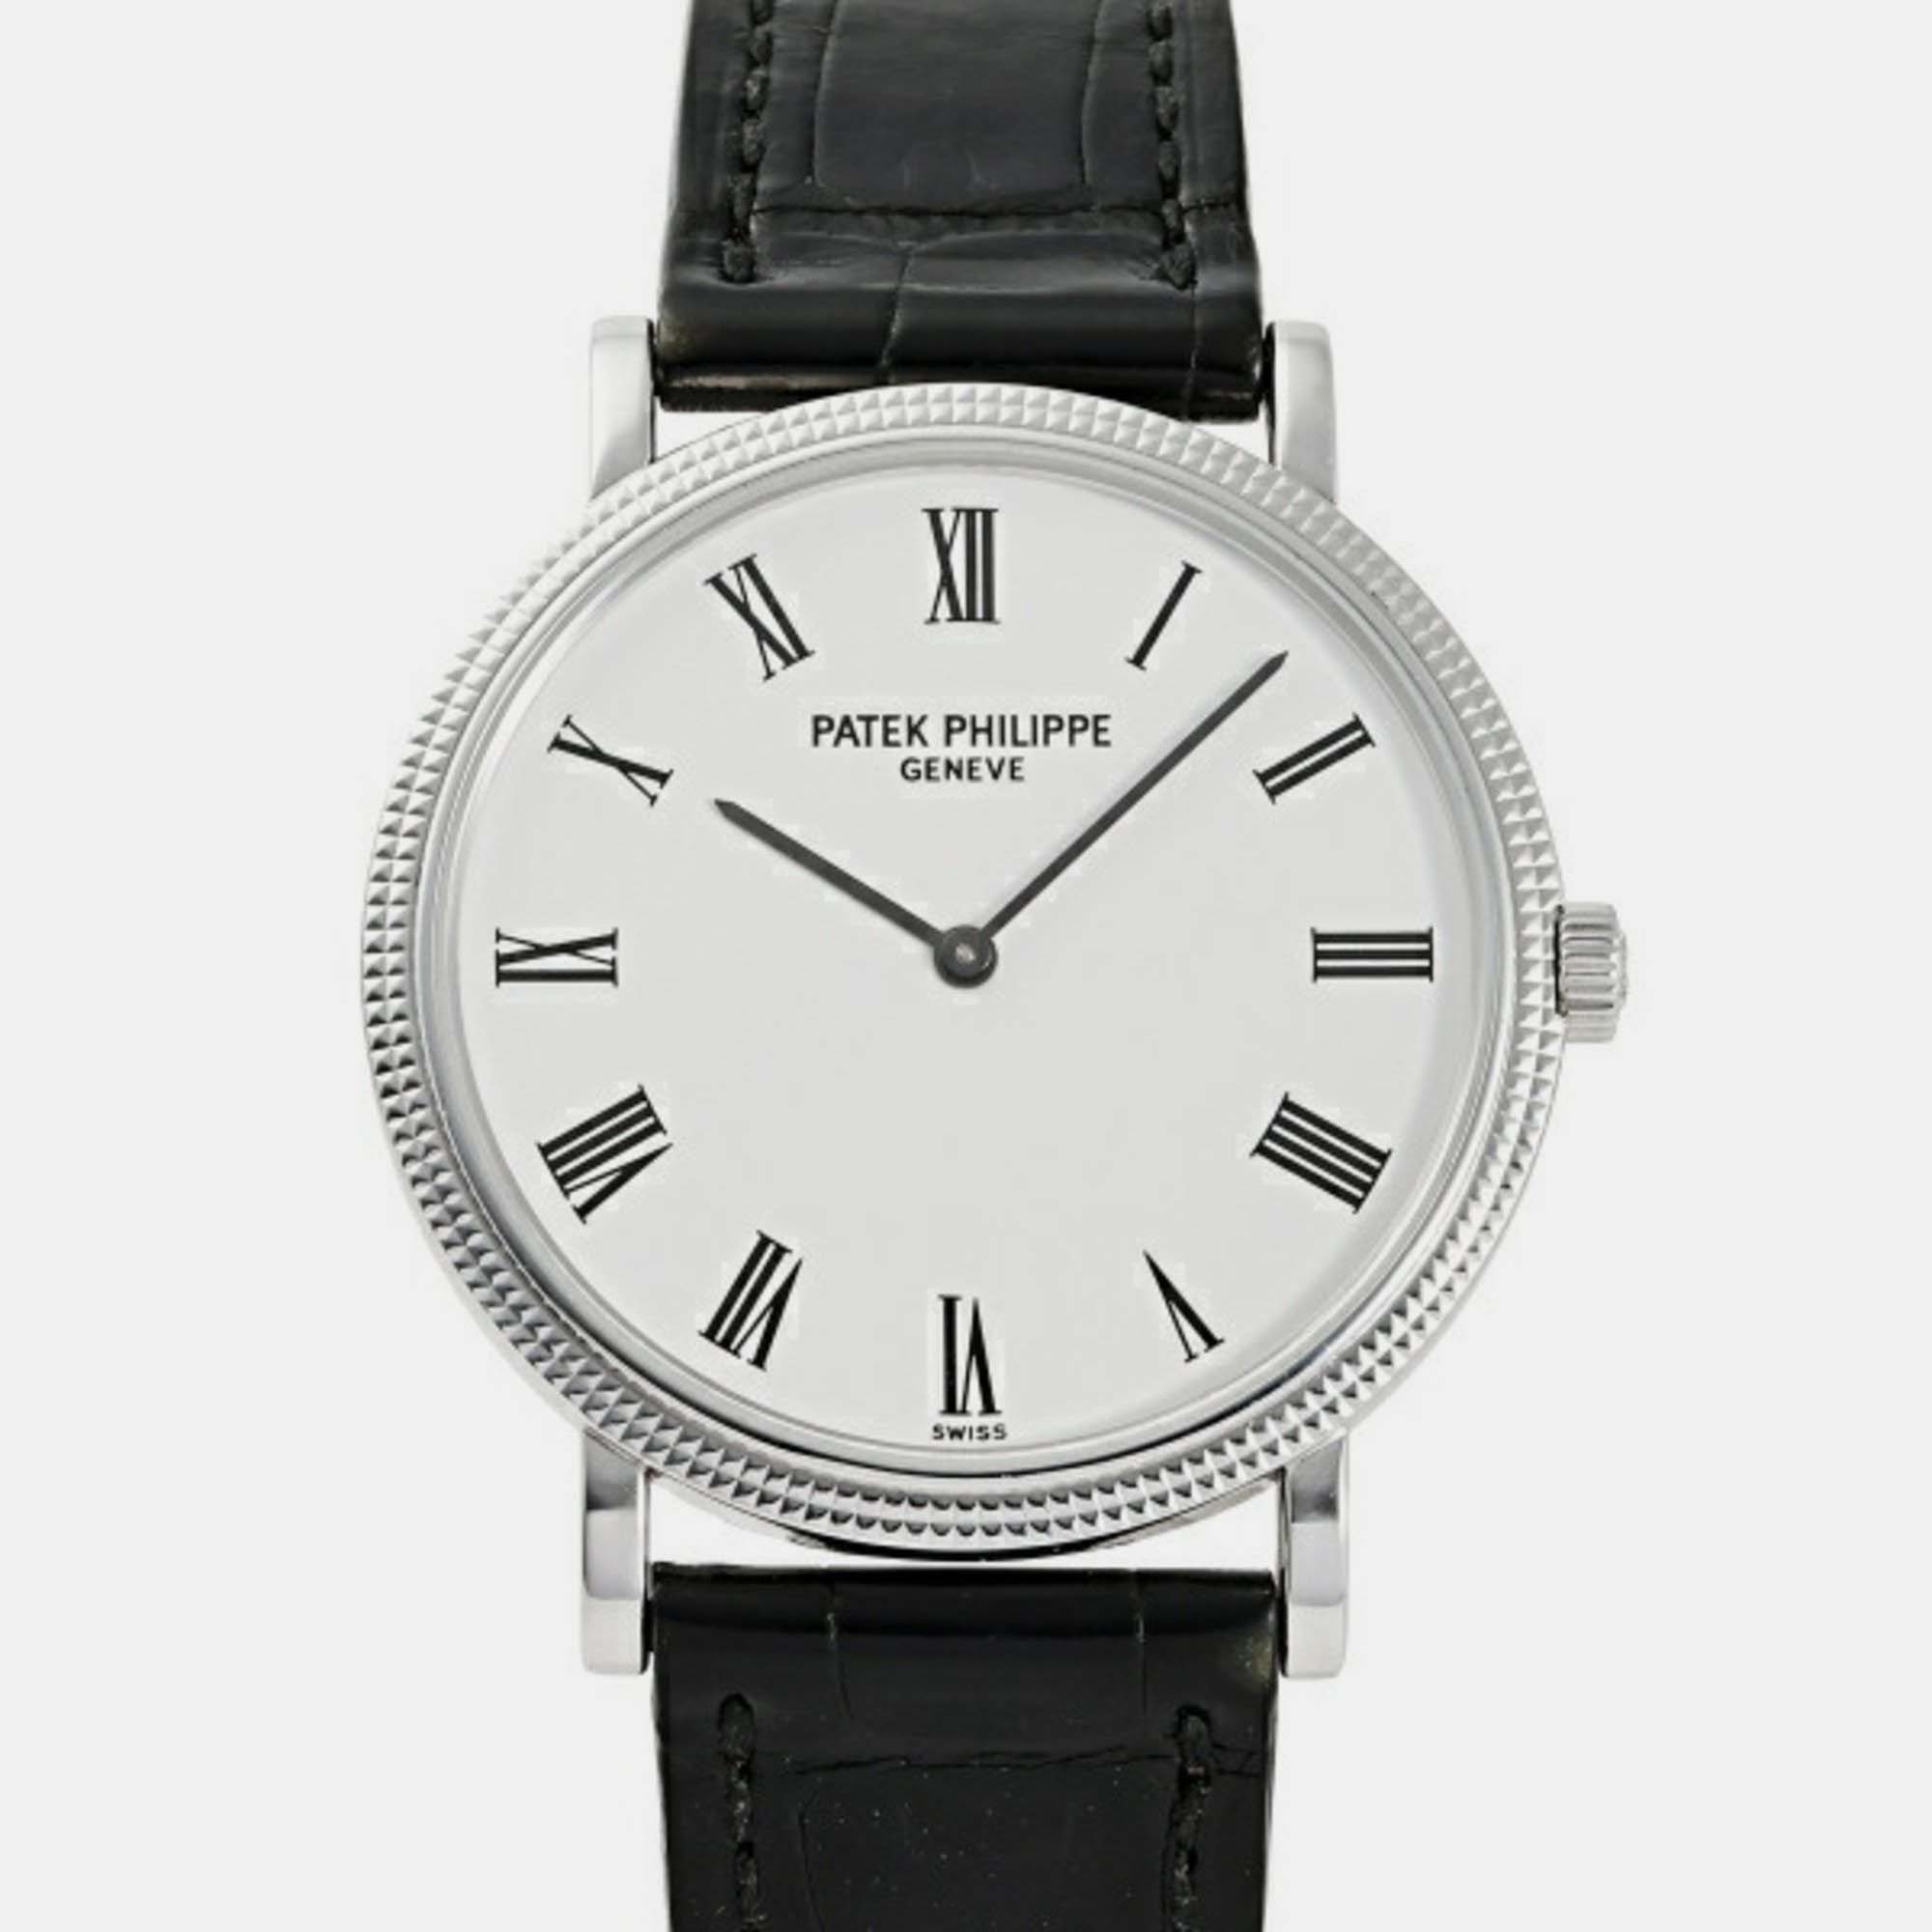 Patek philippe white 18k white gold calatrava 5120g-001 automatic men's wristwatch 35 mm